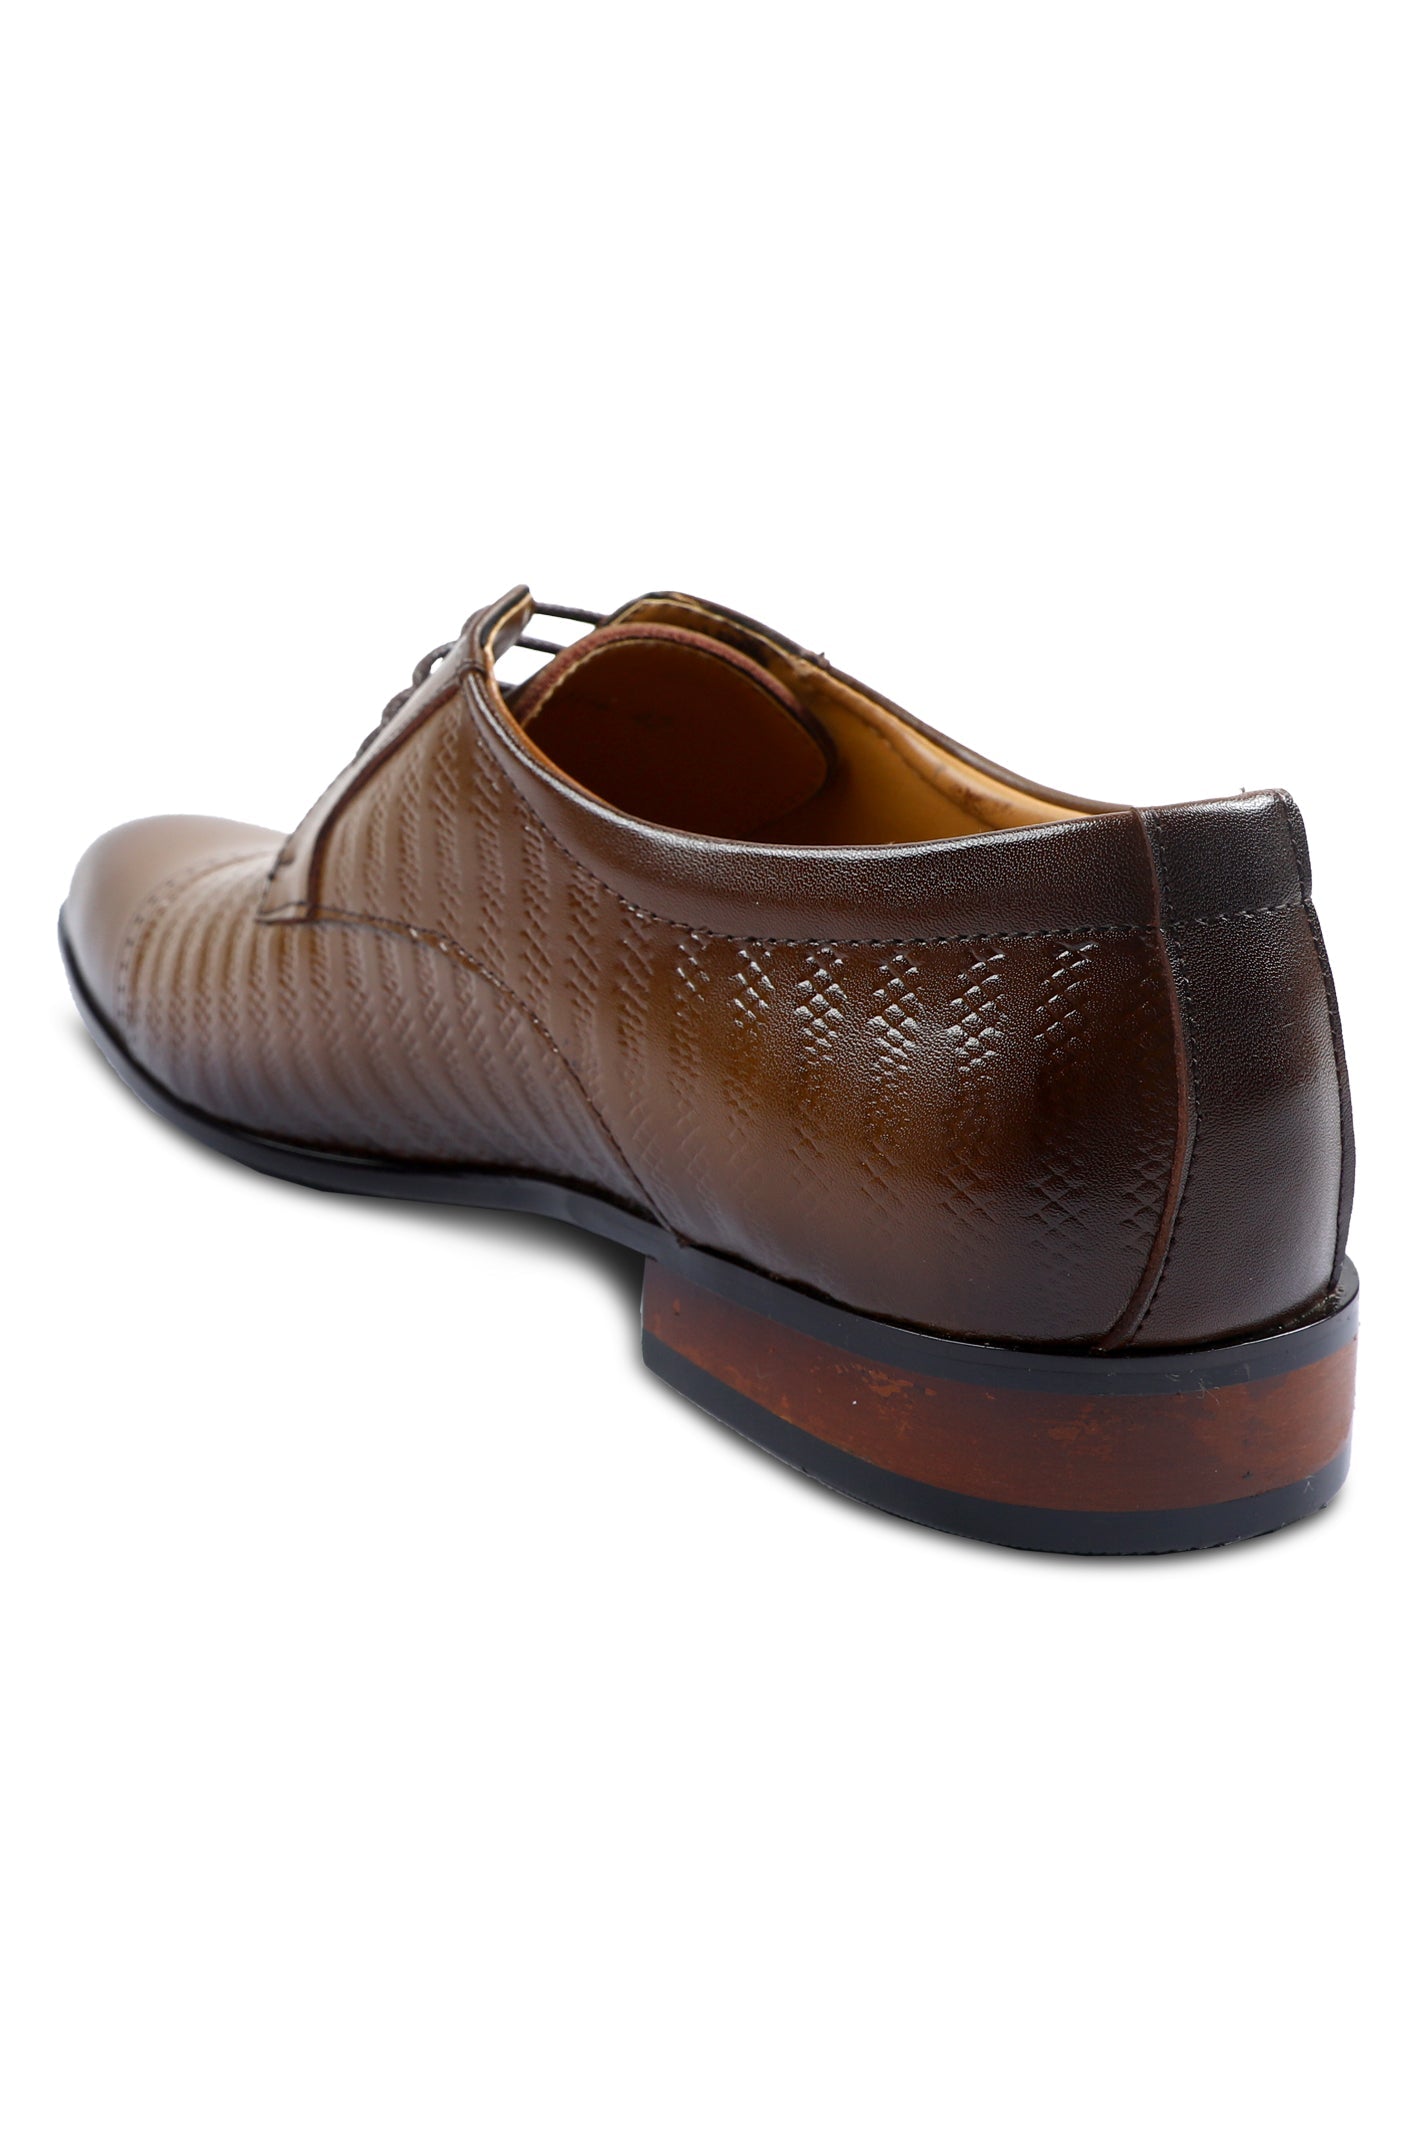 Formal Shoes For Men in Khaki SKU: SMF-0175-KHAKI - Diners